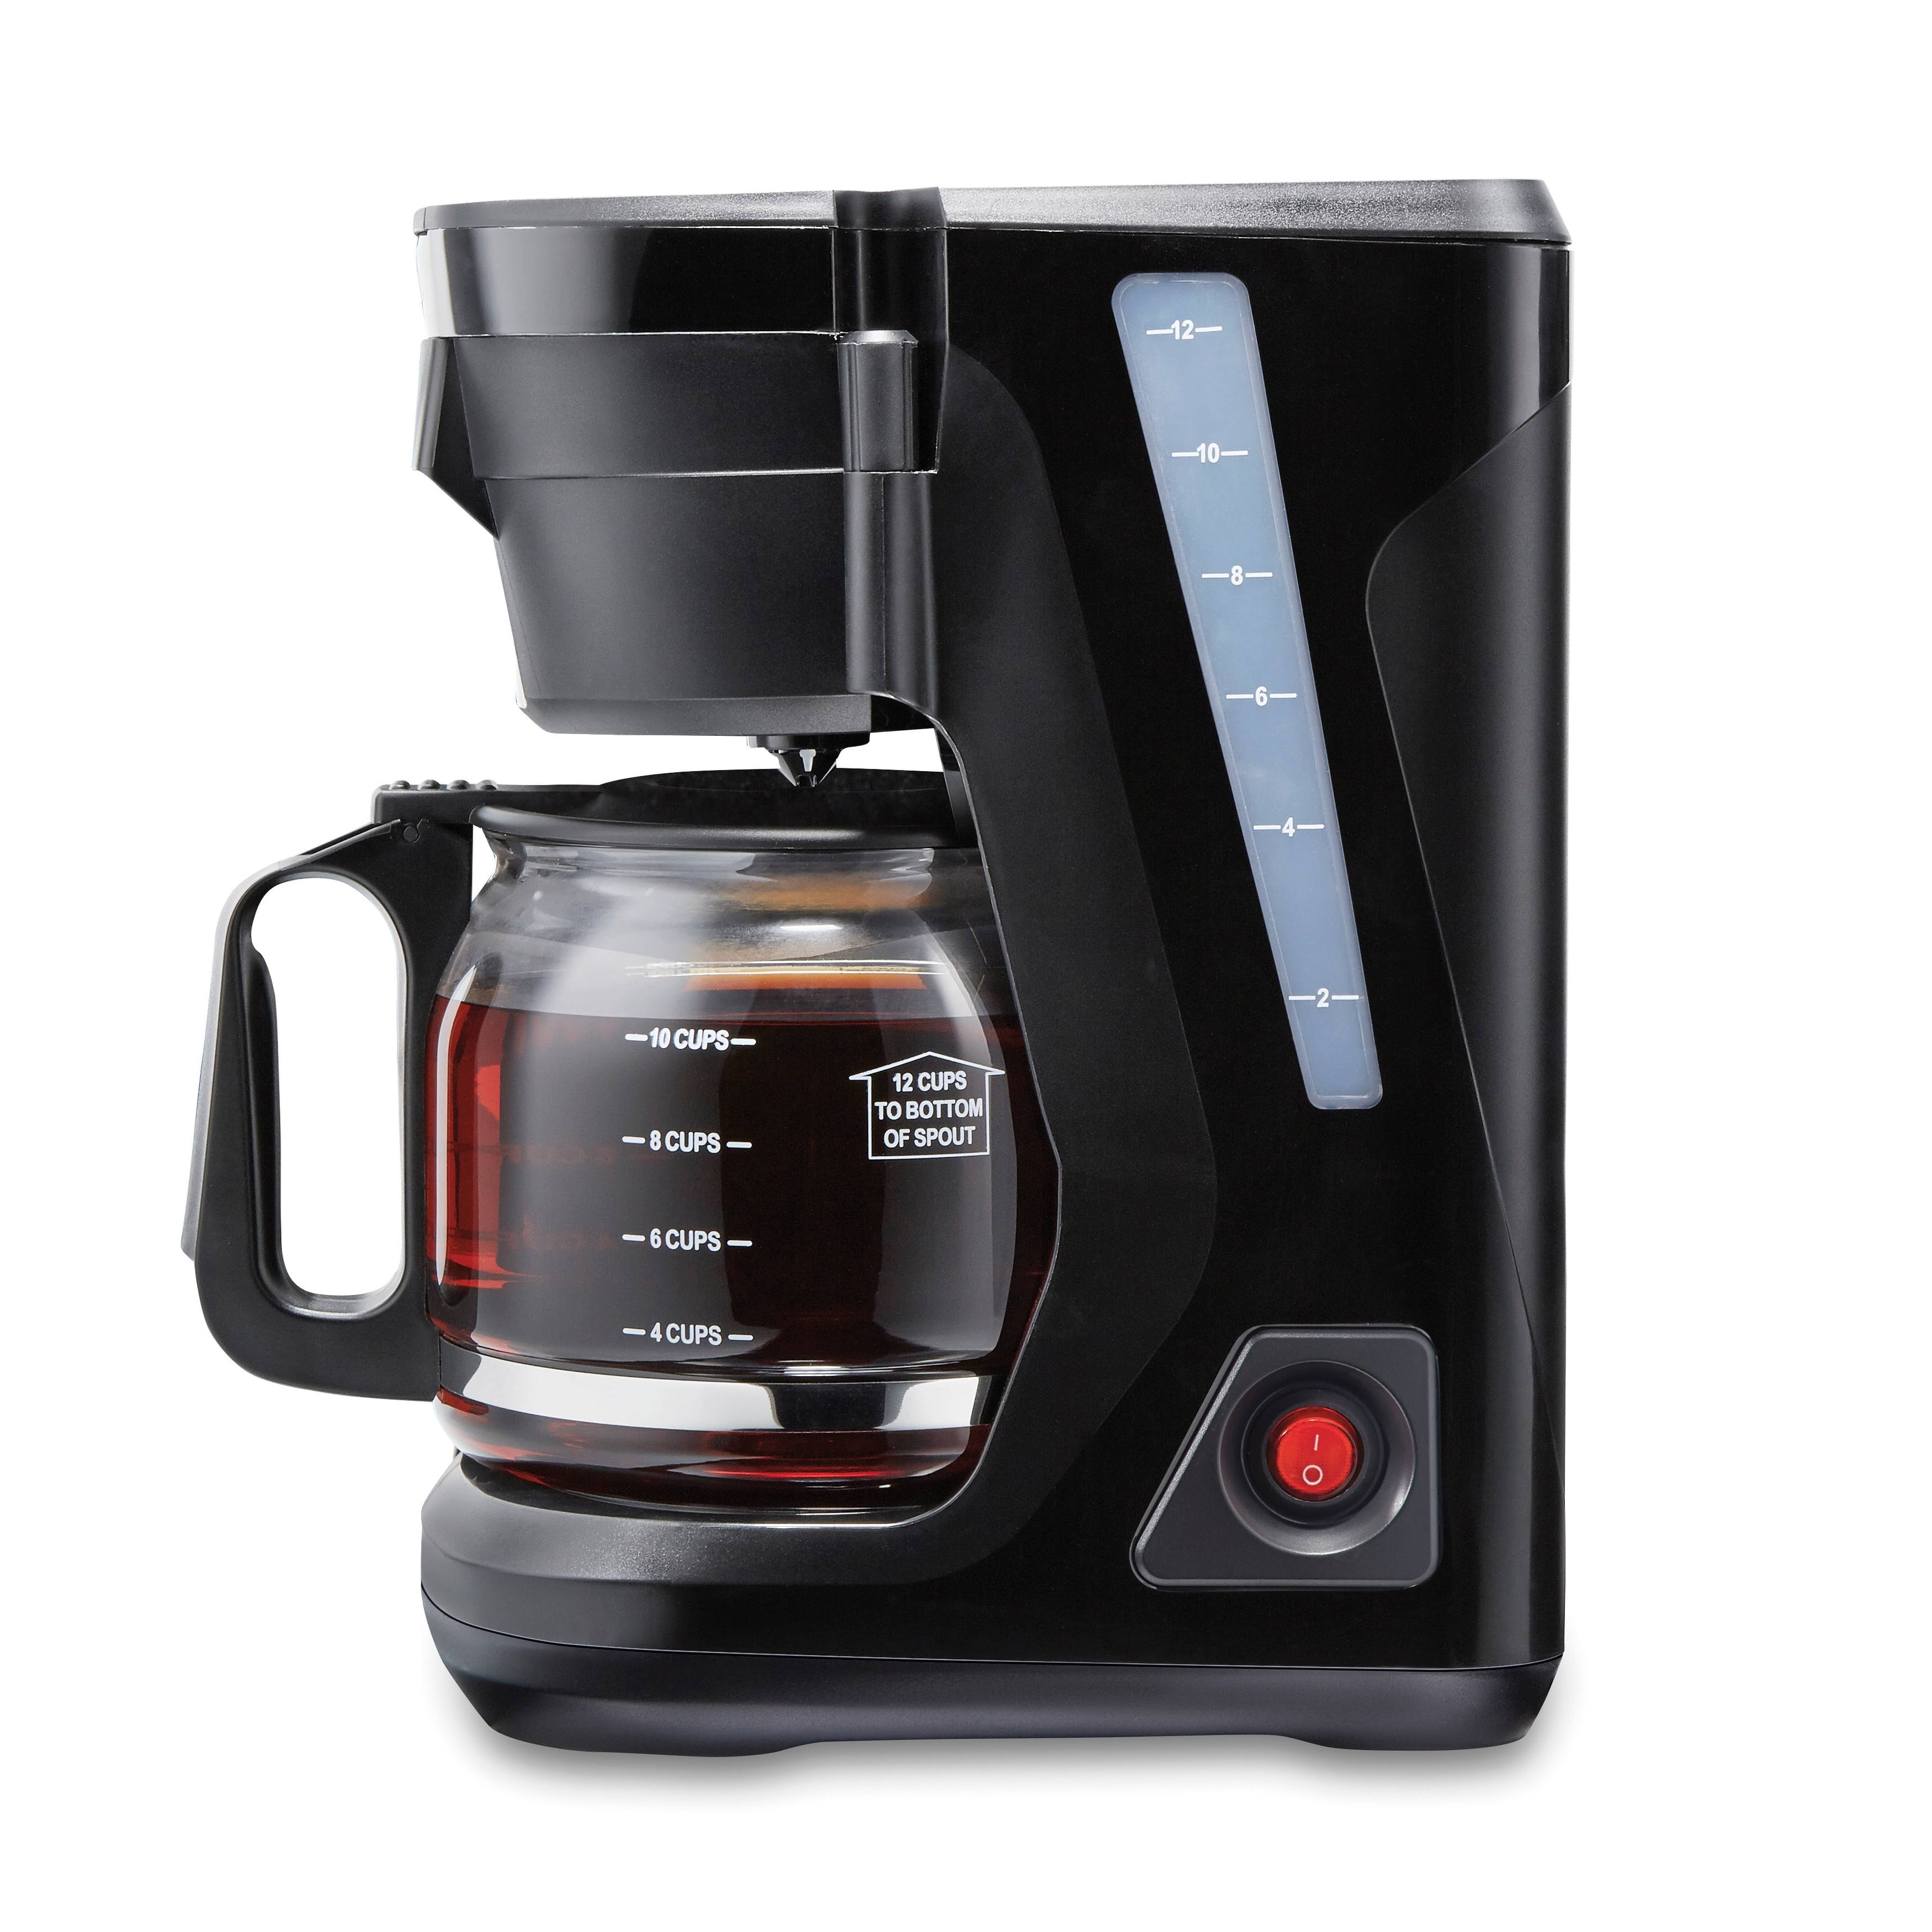 Proctor Silex Programmable Coffee Maker - Black, 12 Cup